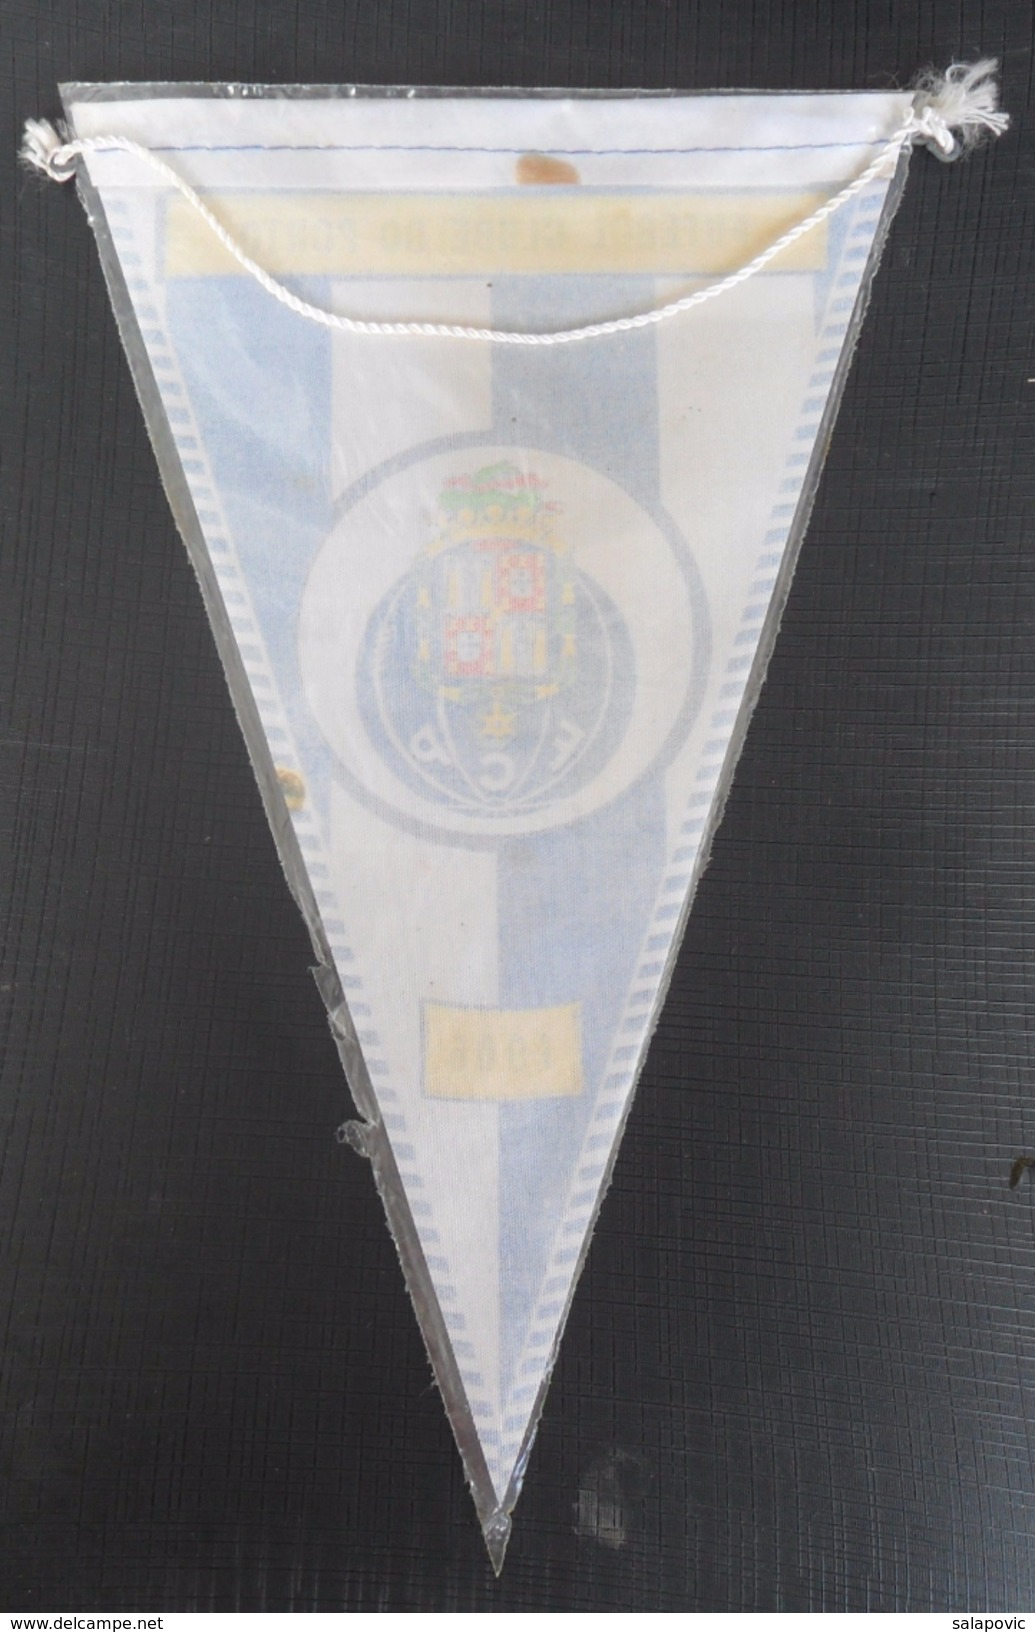 Futebol Clube Do Porto FOOTBALL CLUB, SOCCER / FUTBOL / CALCIO , OLD PENNANT, SPORTS FLAG - Apparel, Souvenirs & Other